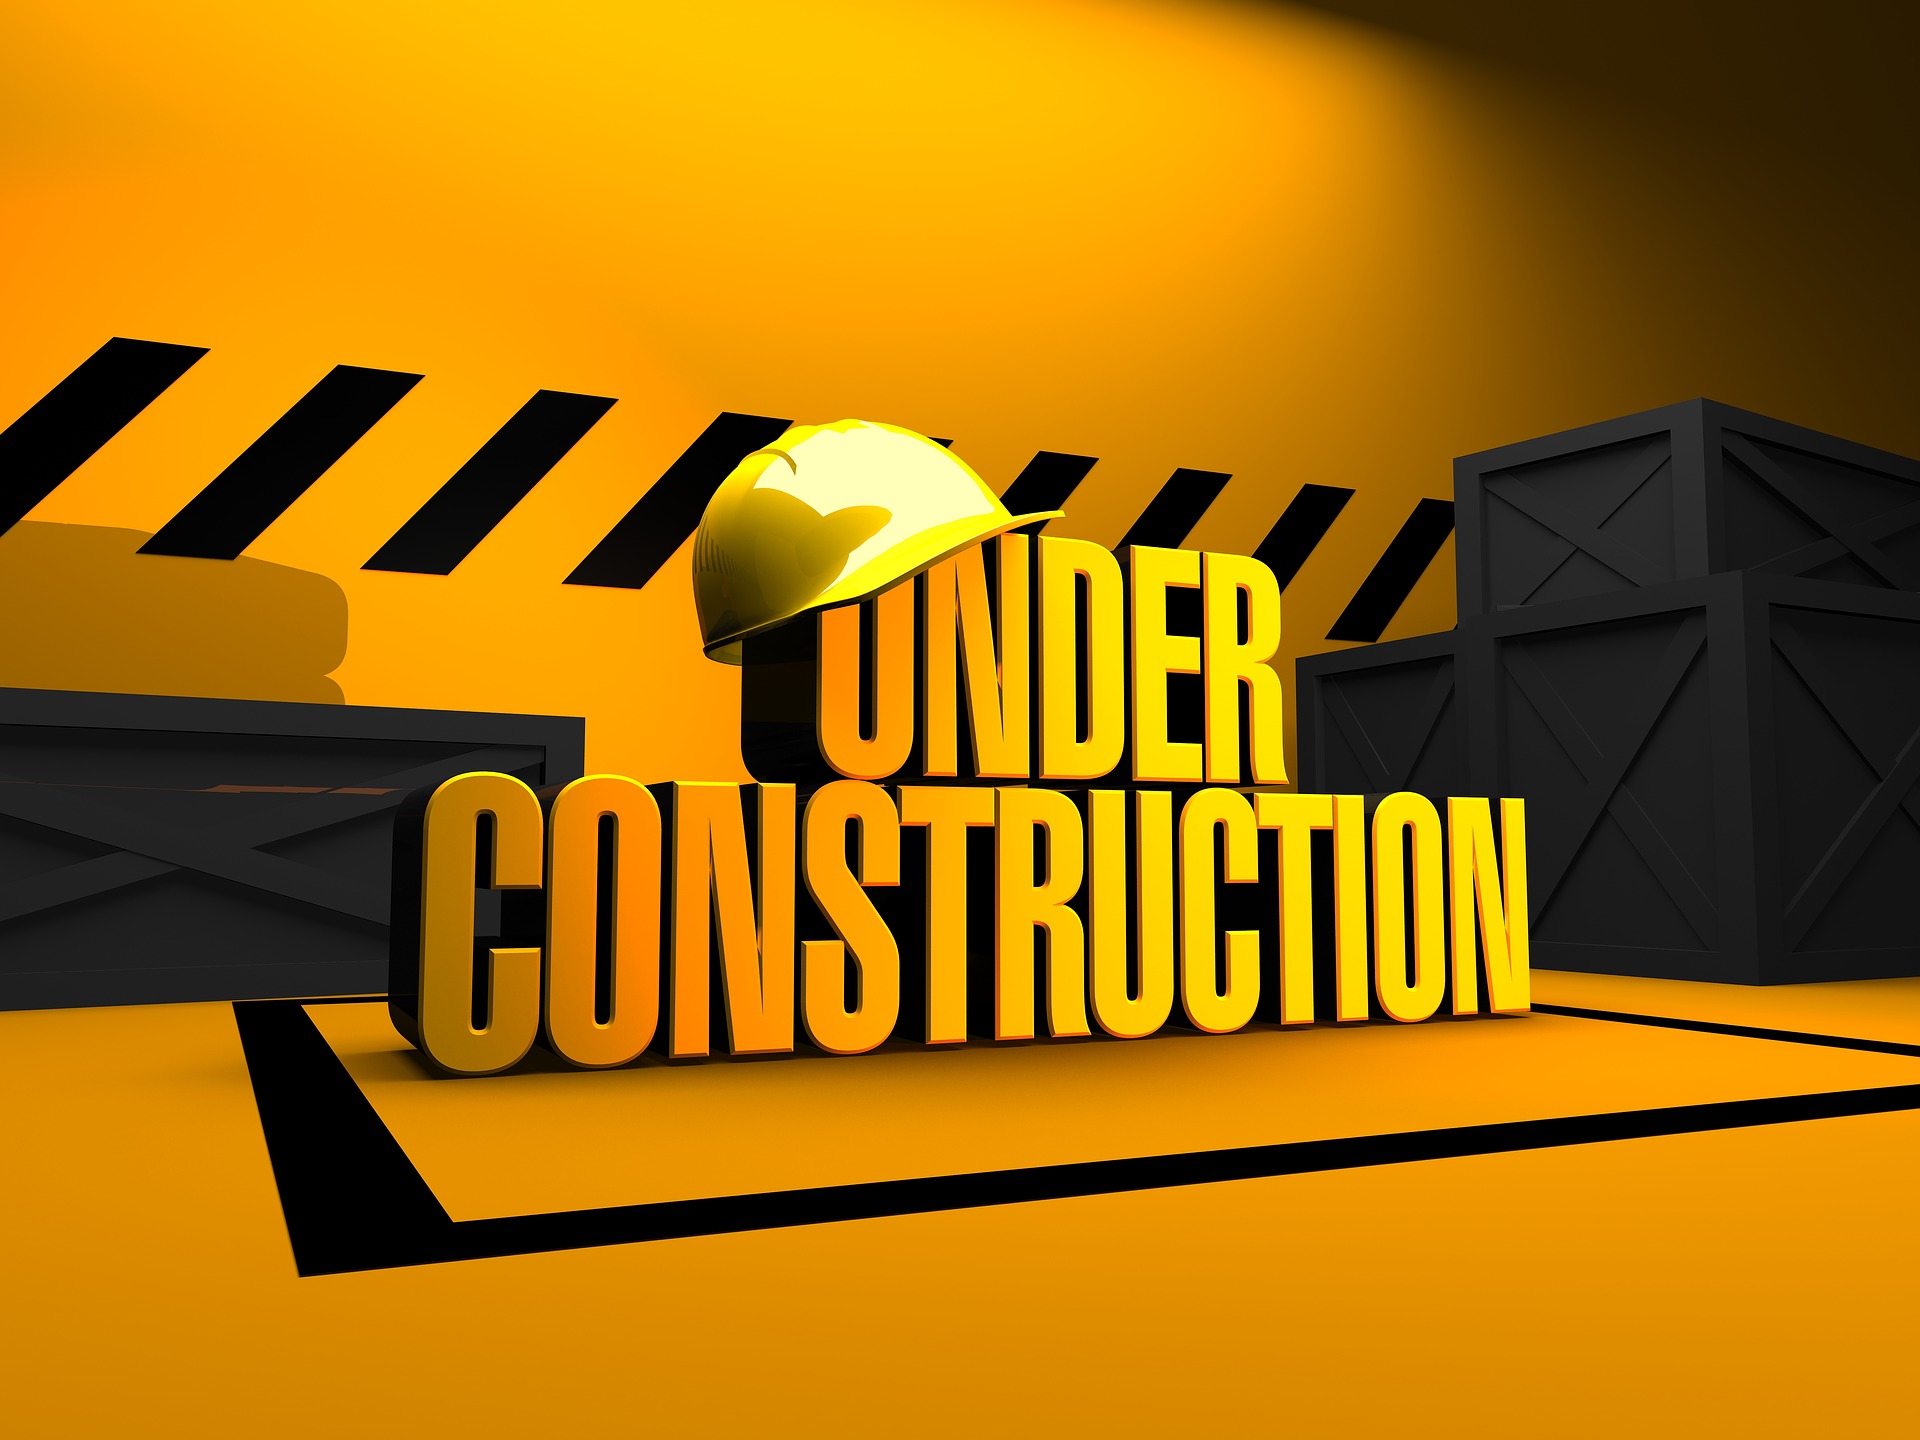 under construction (c) Bild von 3D Animation Production Company auf Pixabay